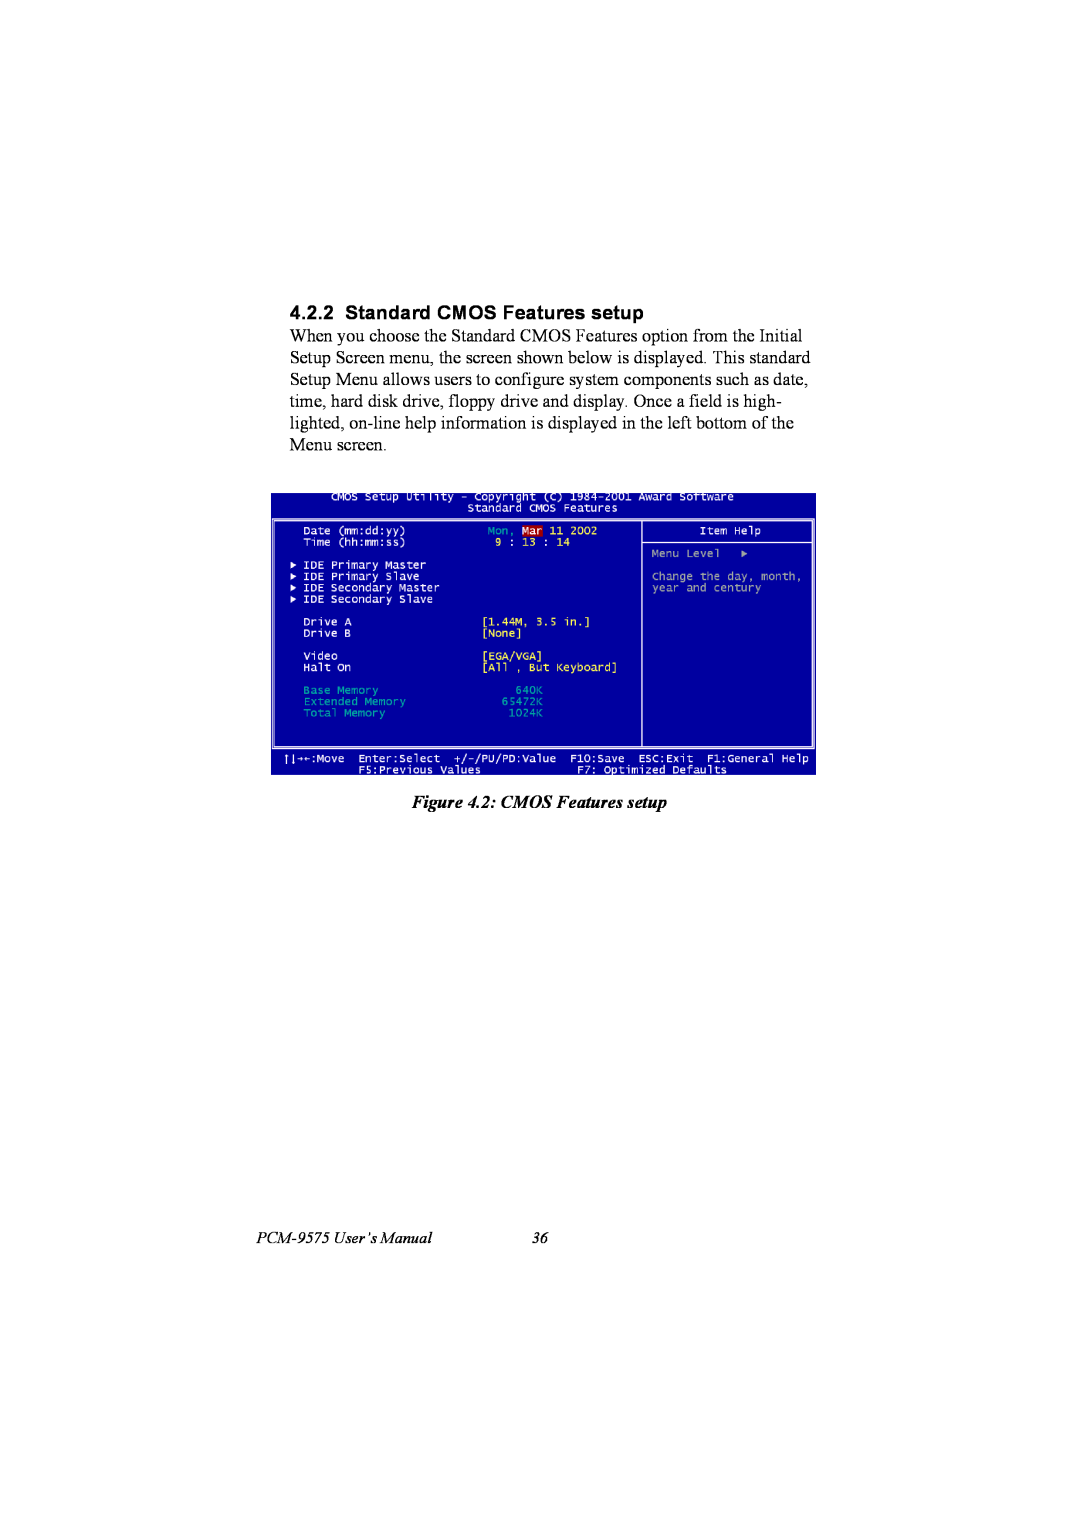 IBM PCM-9575, 100/10 user manual Standard CMOS Features setup, 2 CMOS Features setup 